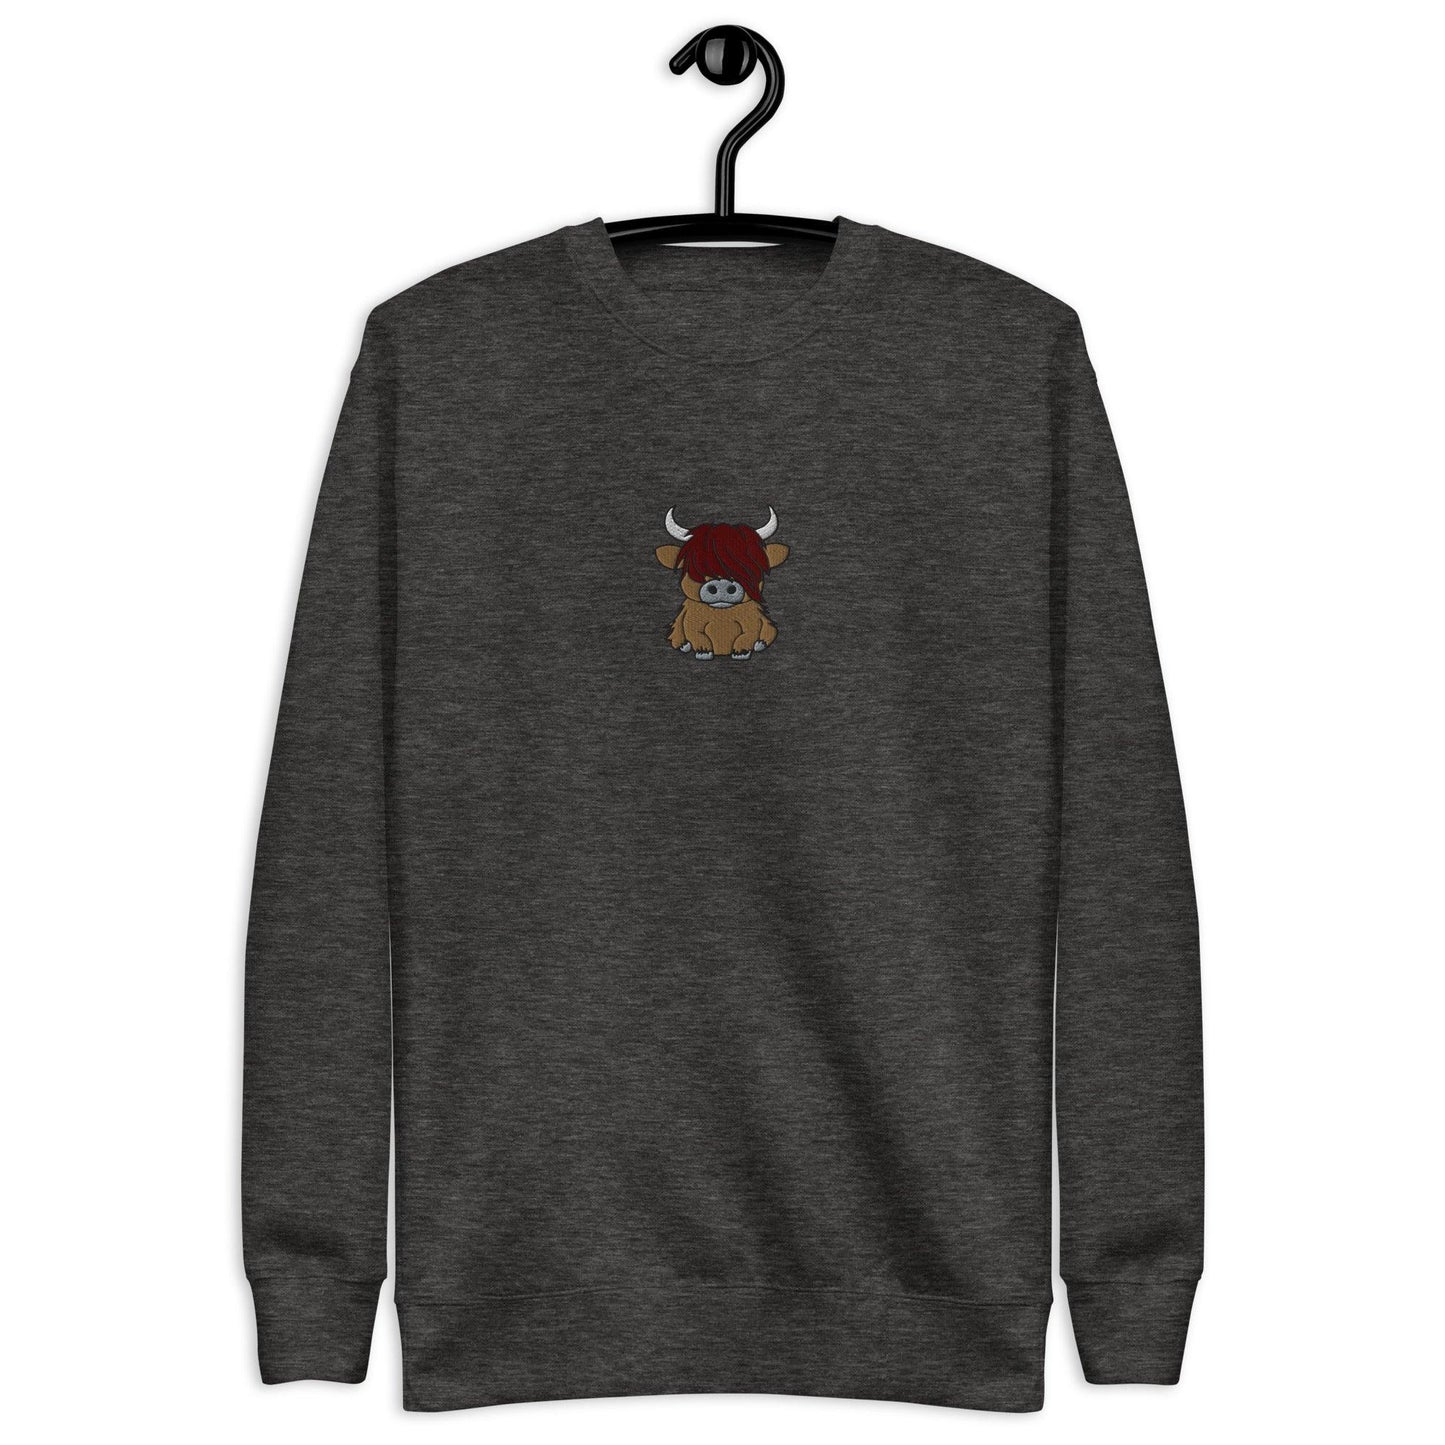 Scottish Highland Cow Sweatshirt - Embroidered - The Global Wanderer